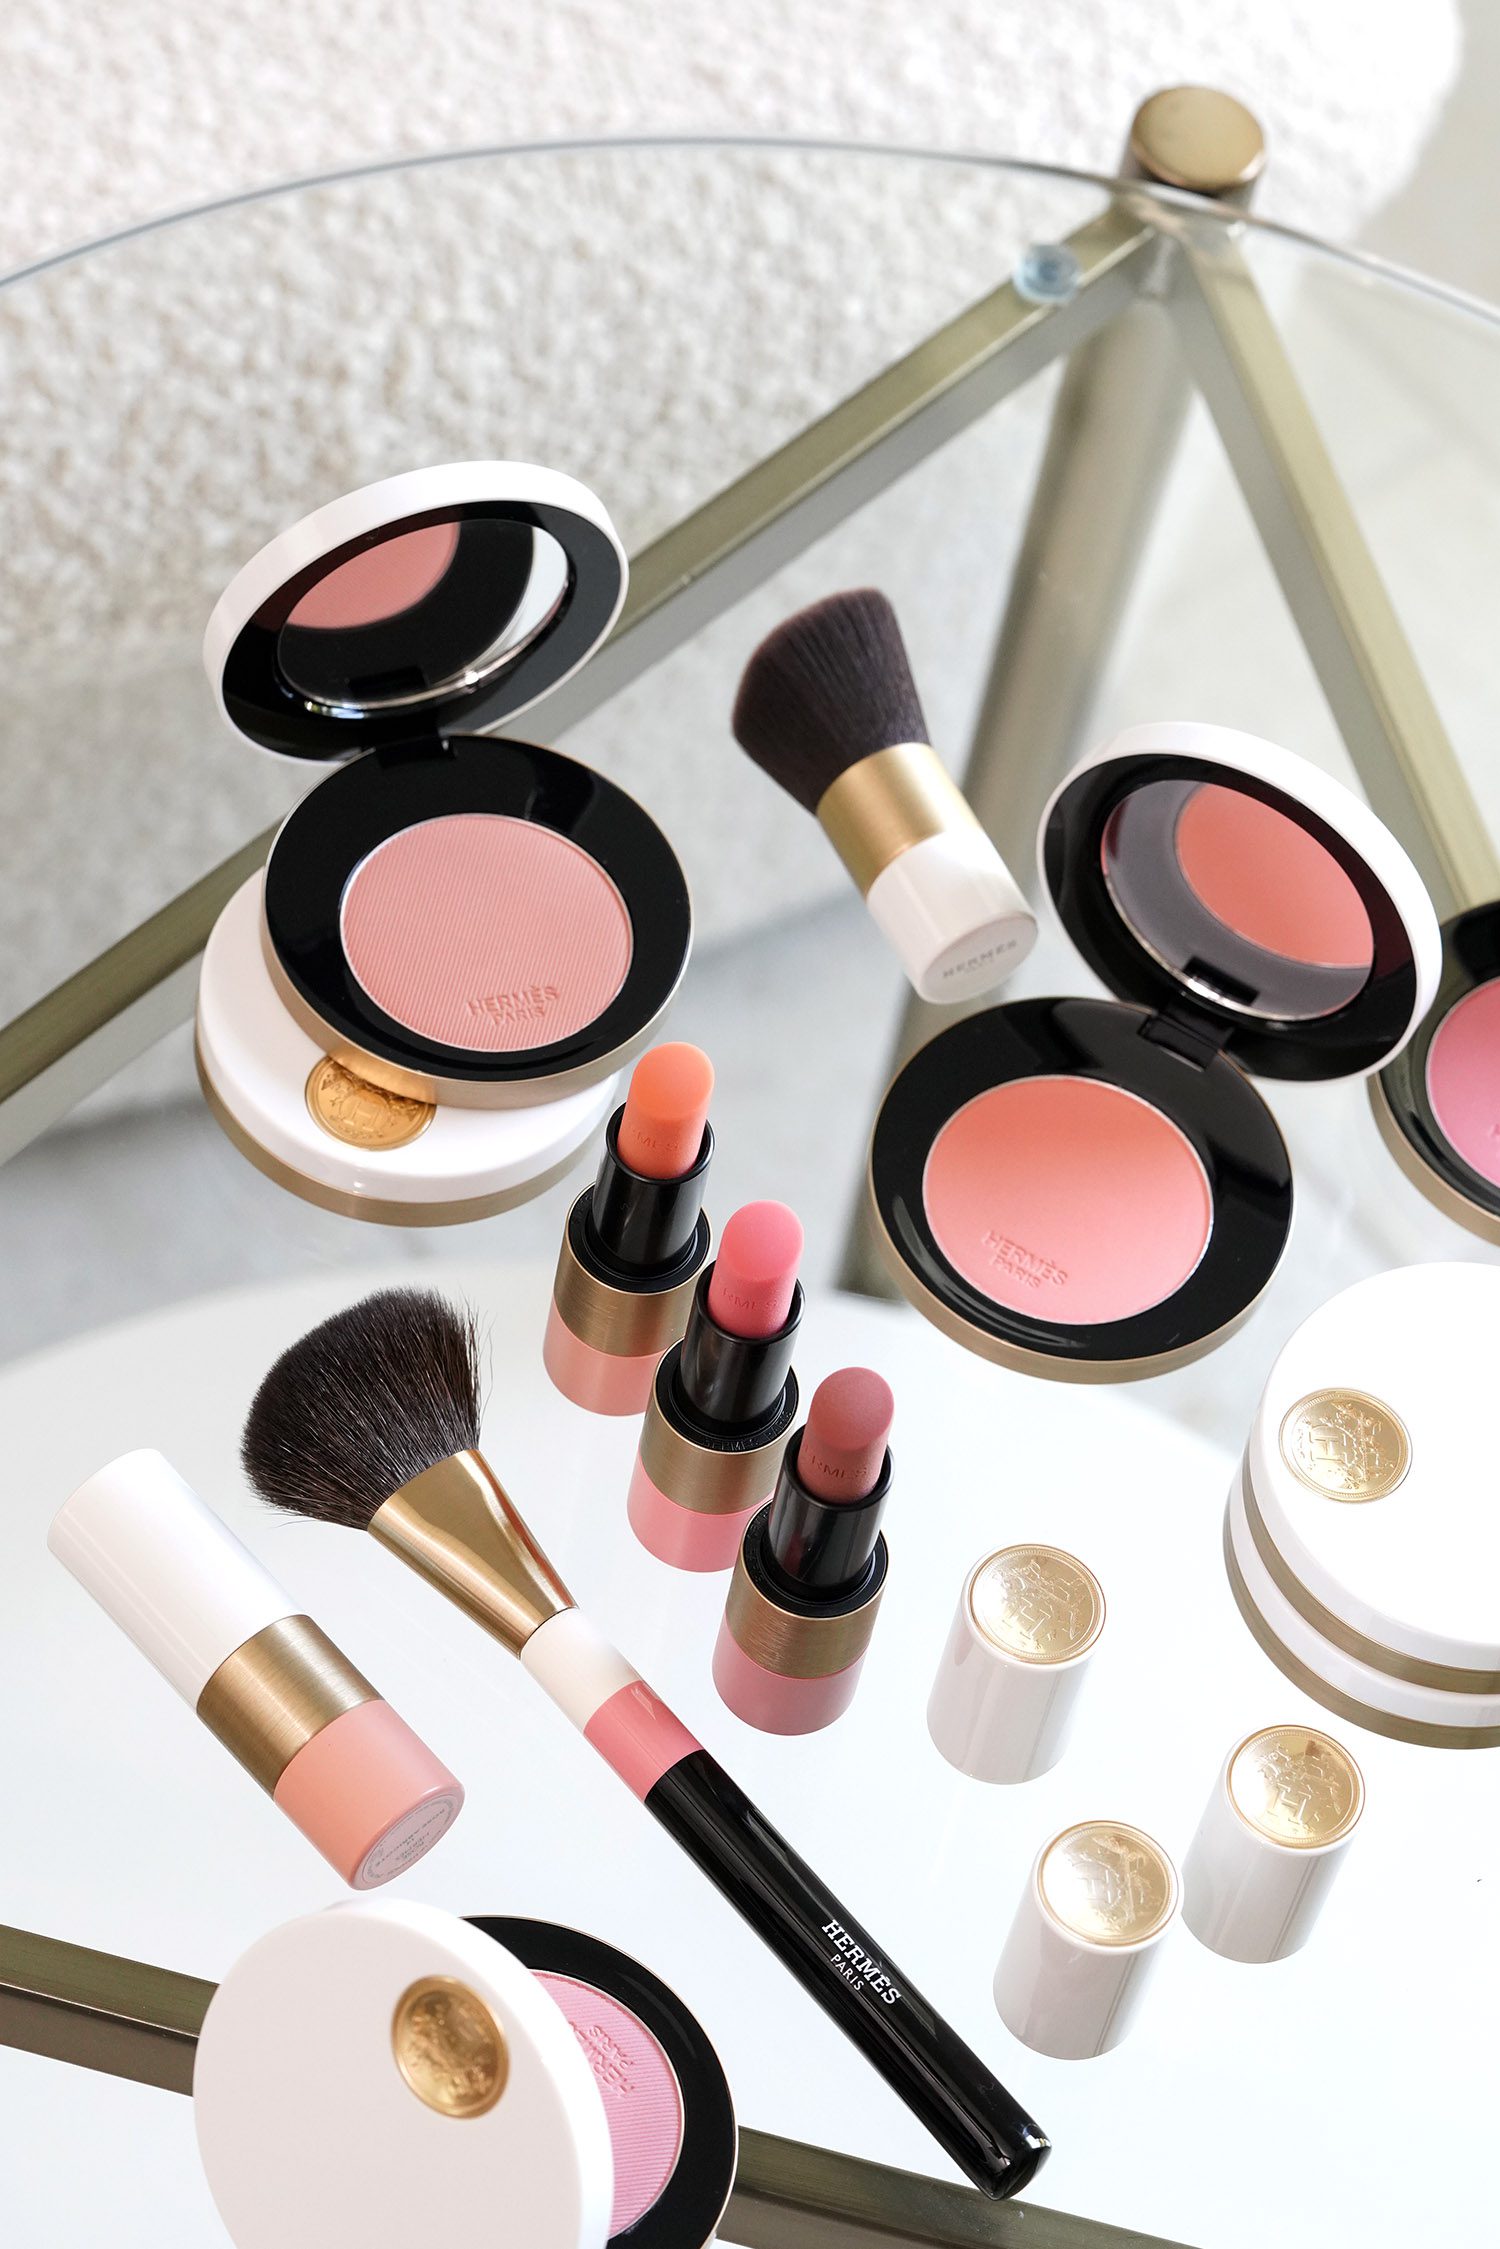 Rose Hermes Silky Blush Powder + Rosy Lip Enhancer Review - The